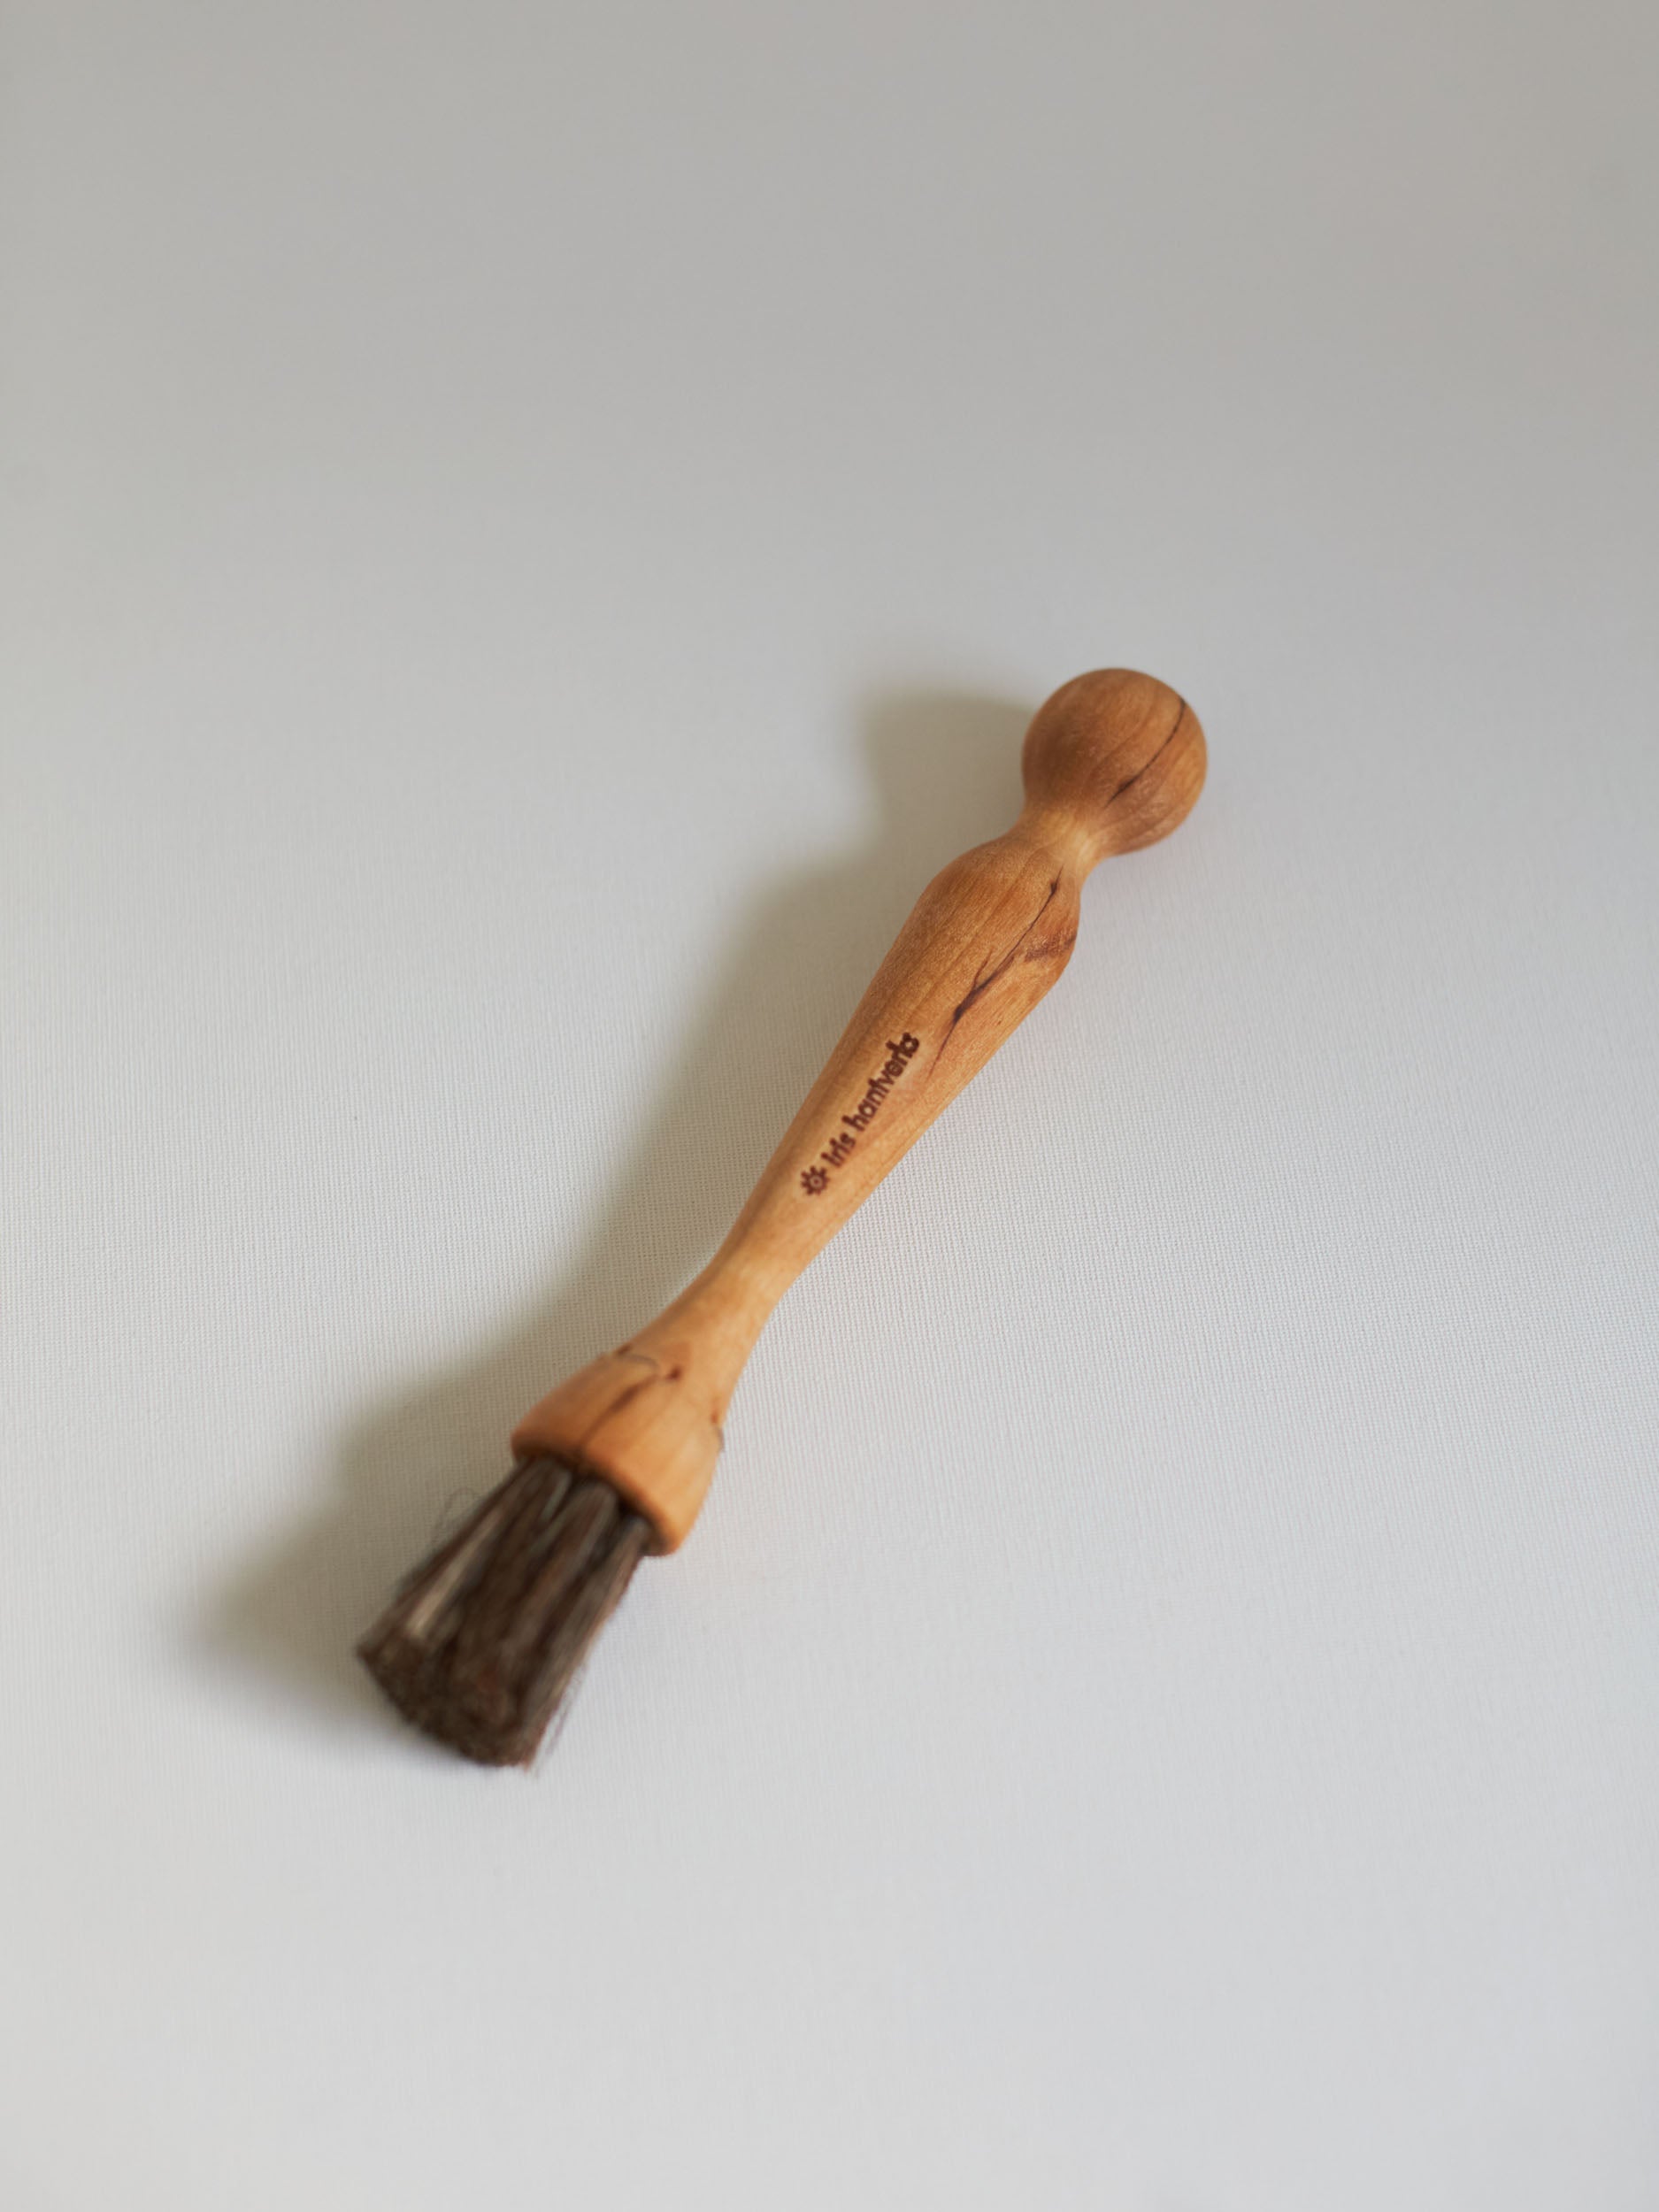 Mushroom Brush, Sustainable Design by TAOS